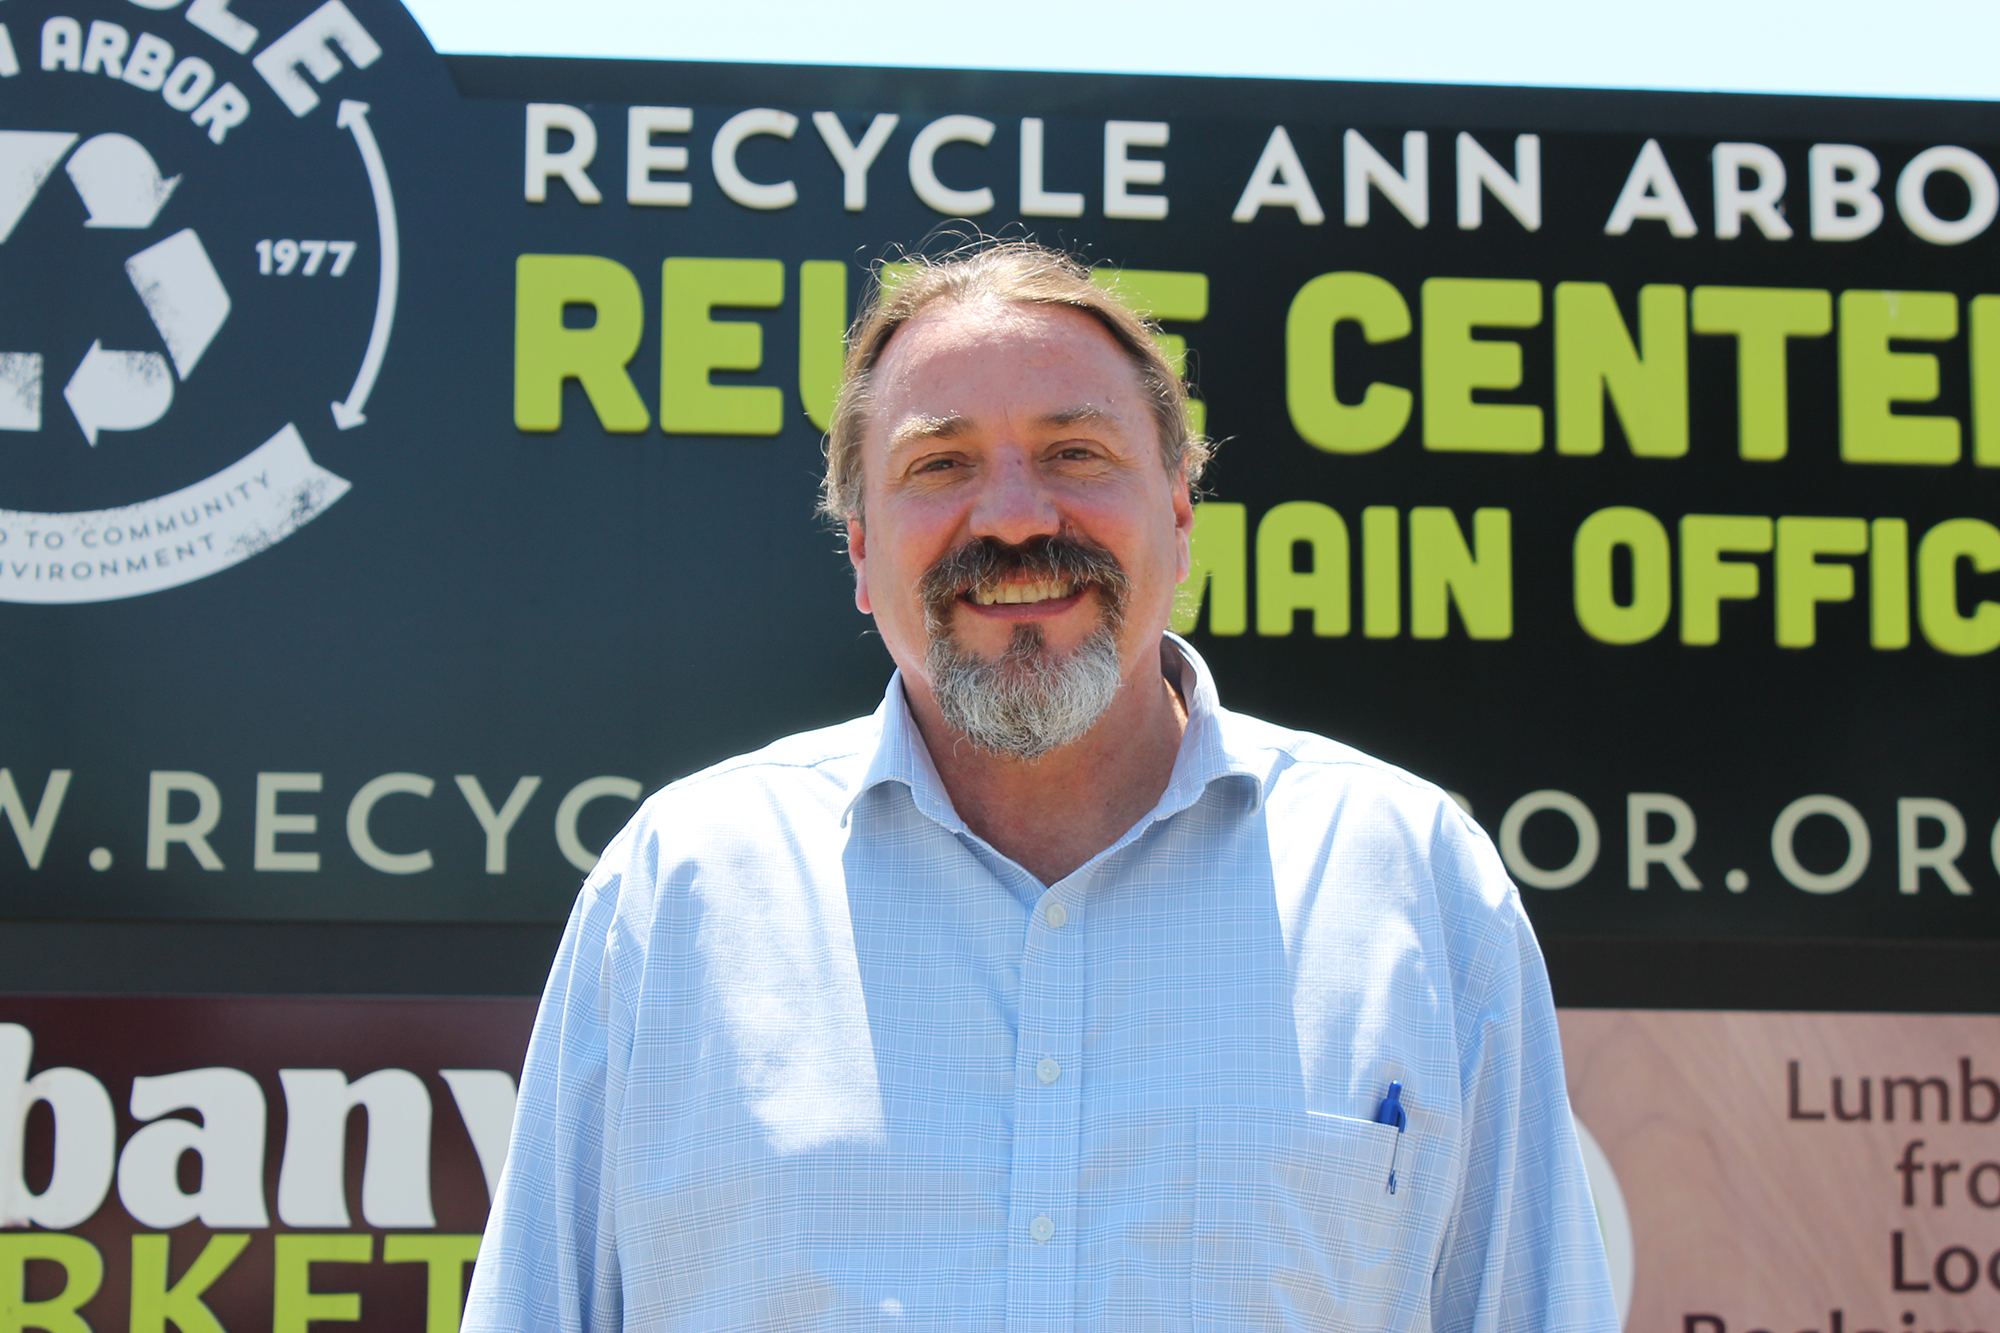 Meet Bryan Ukena, Recycle Ann Arbor's New CEO